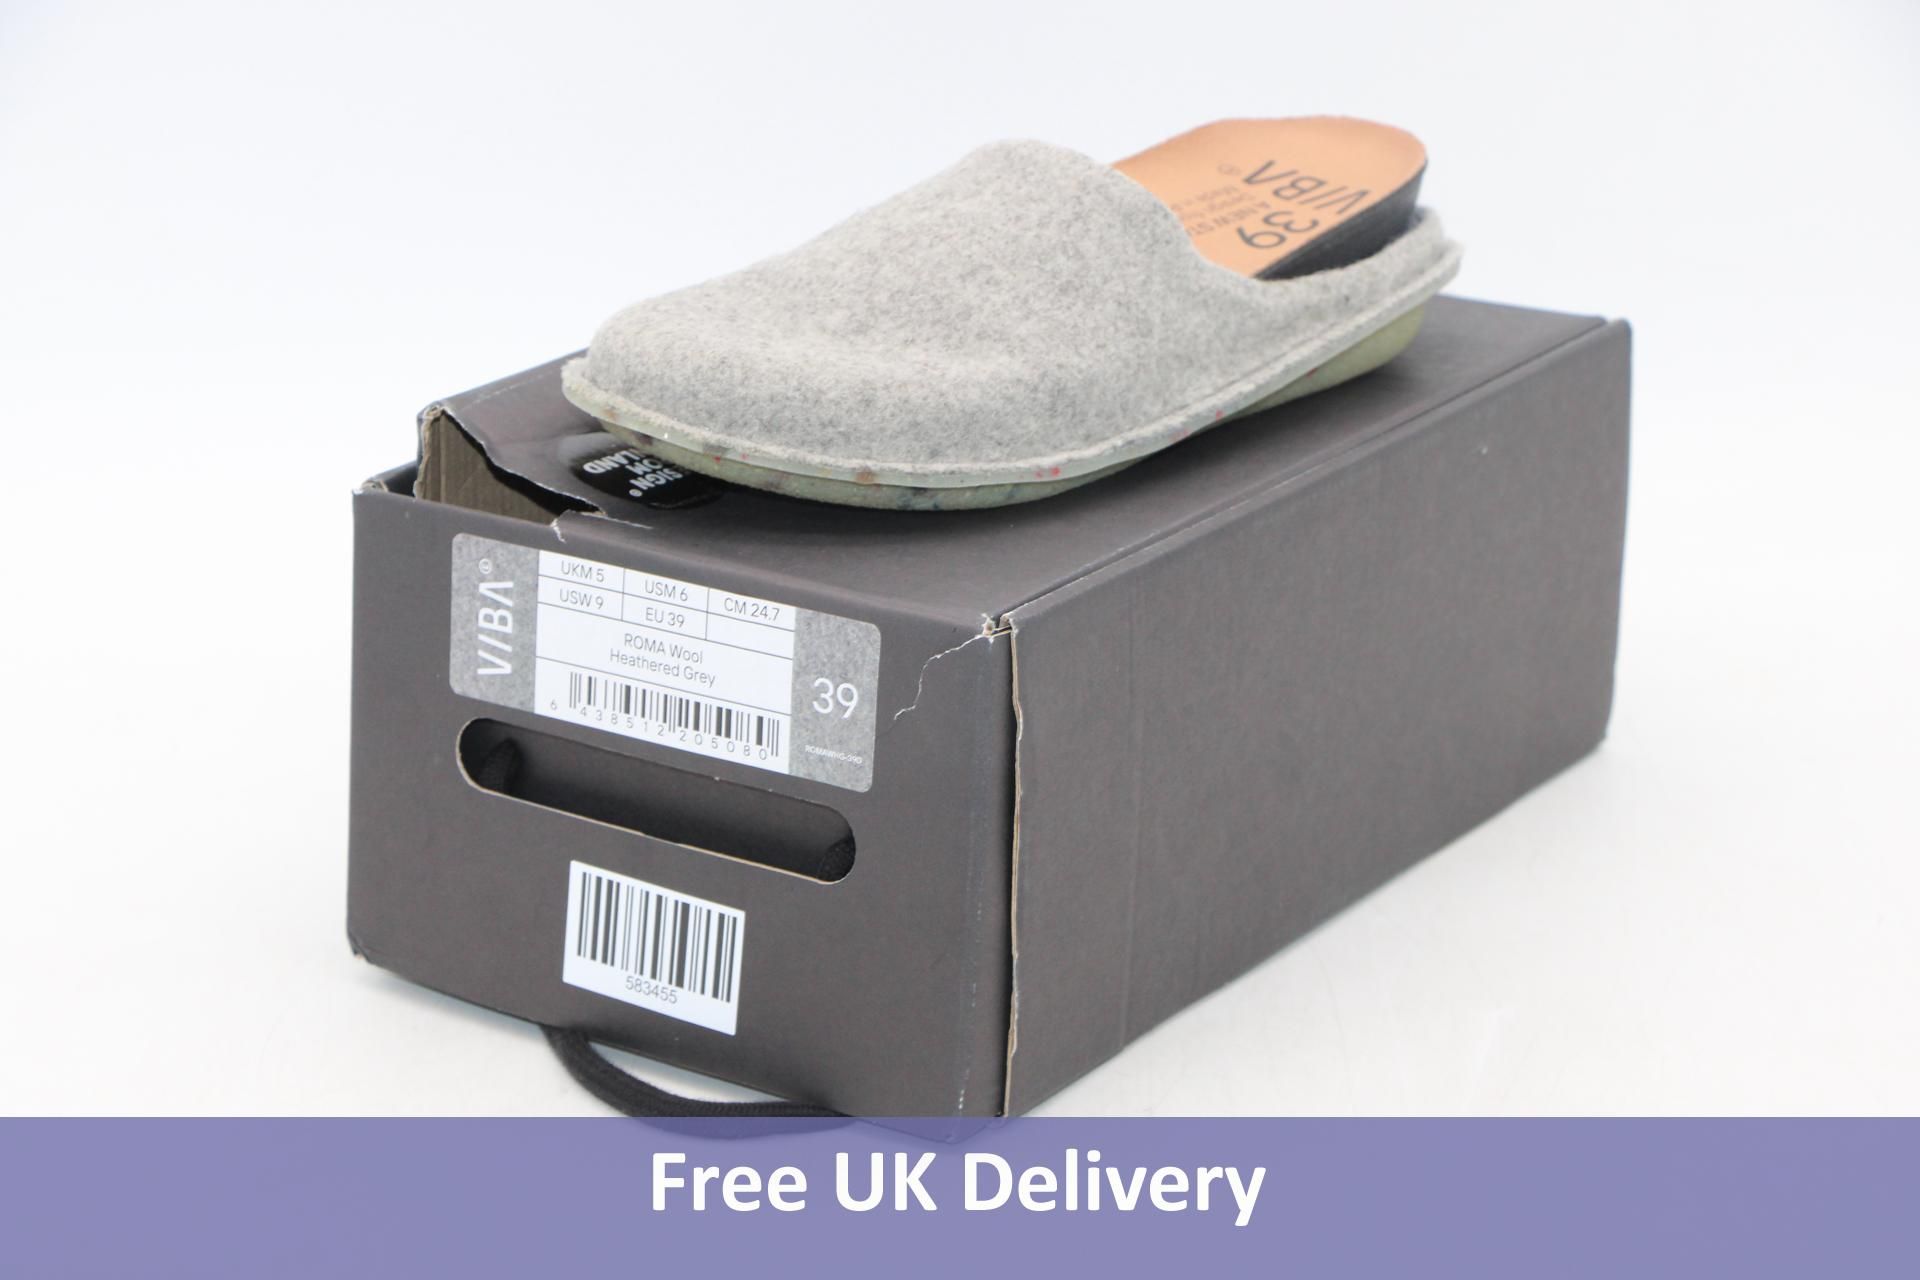 Viba Men's Slippers with Insoles, Grey Felt, Size 39. Box damaged